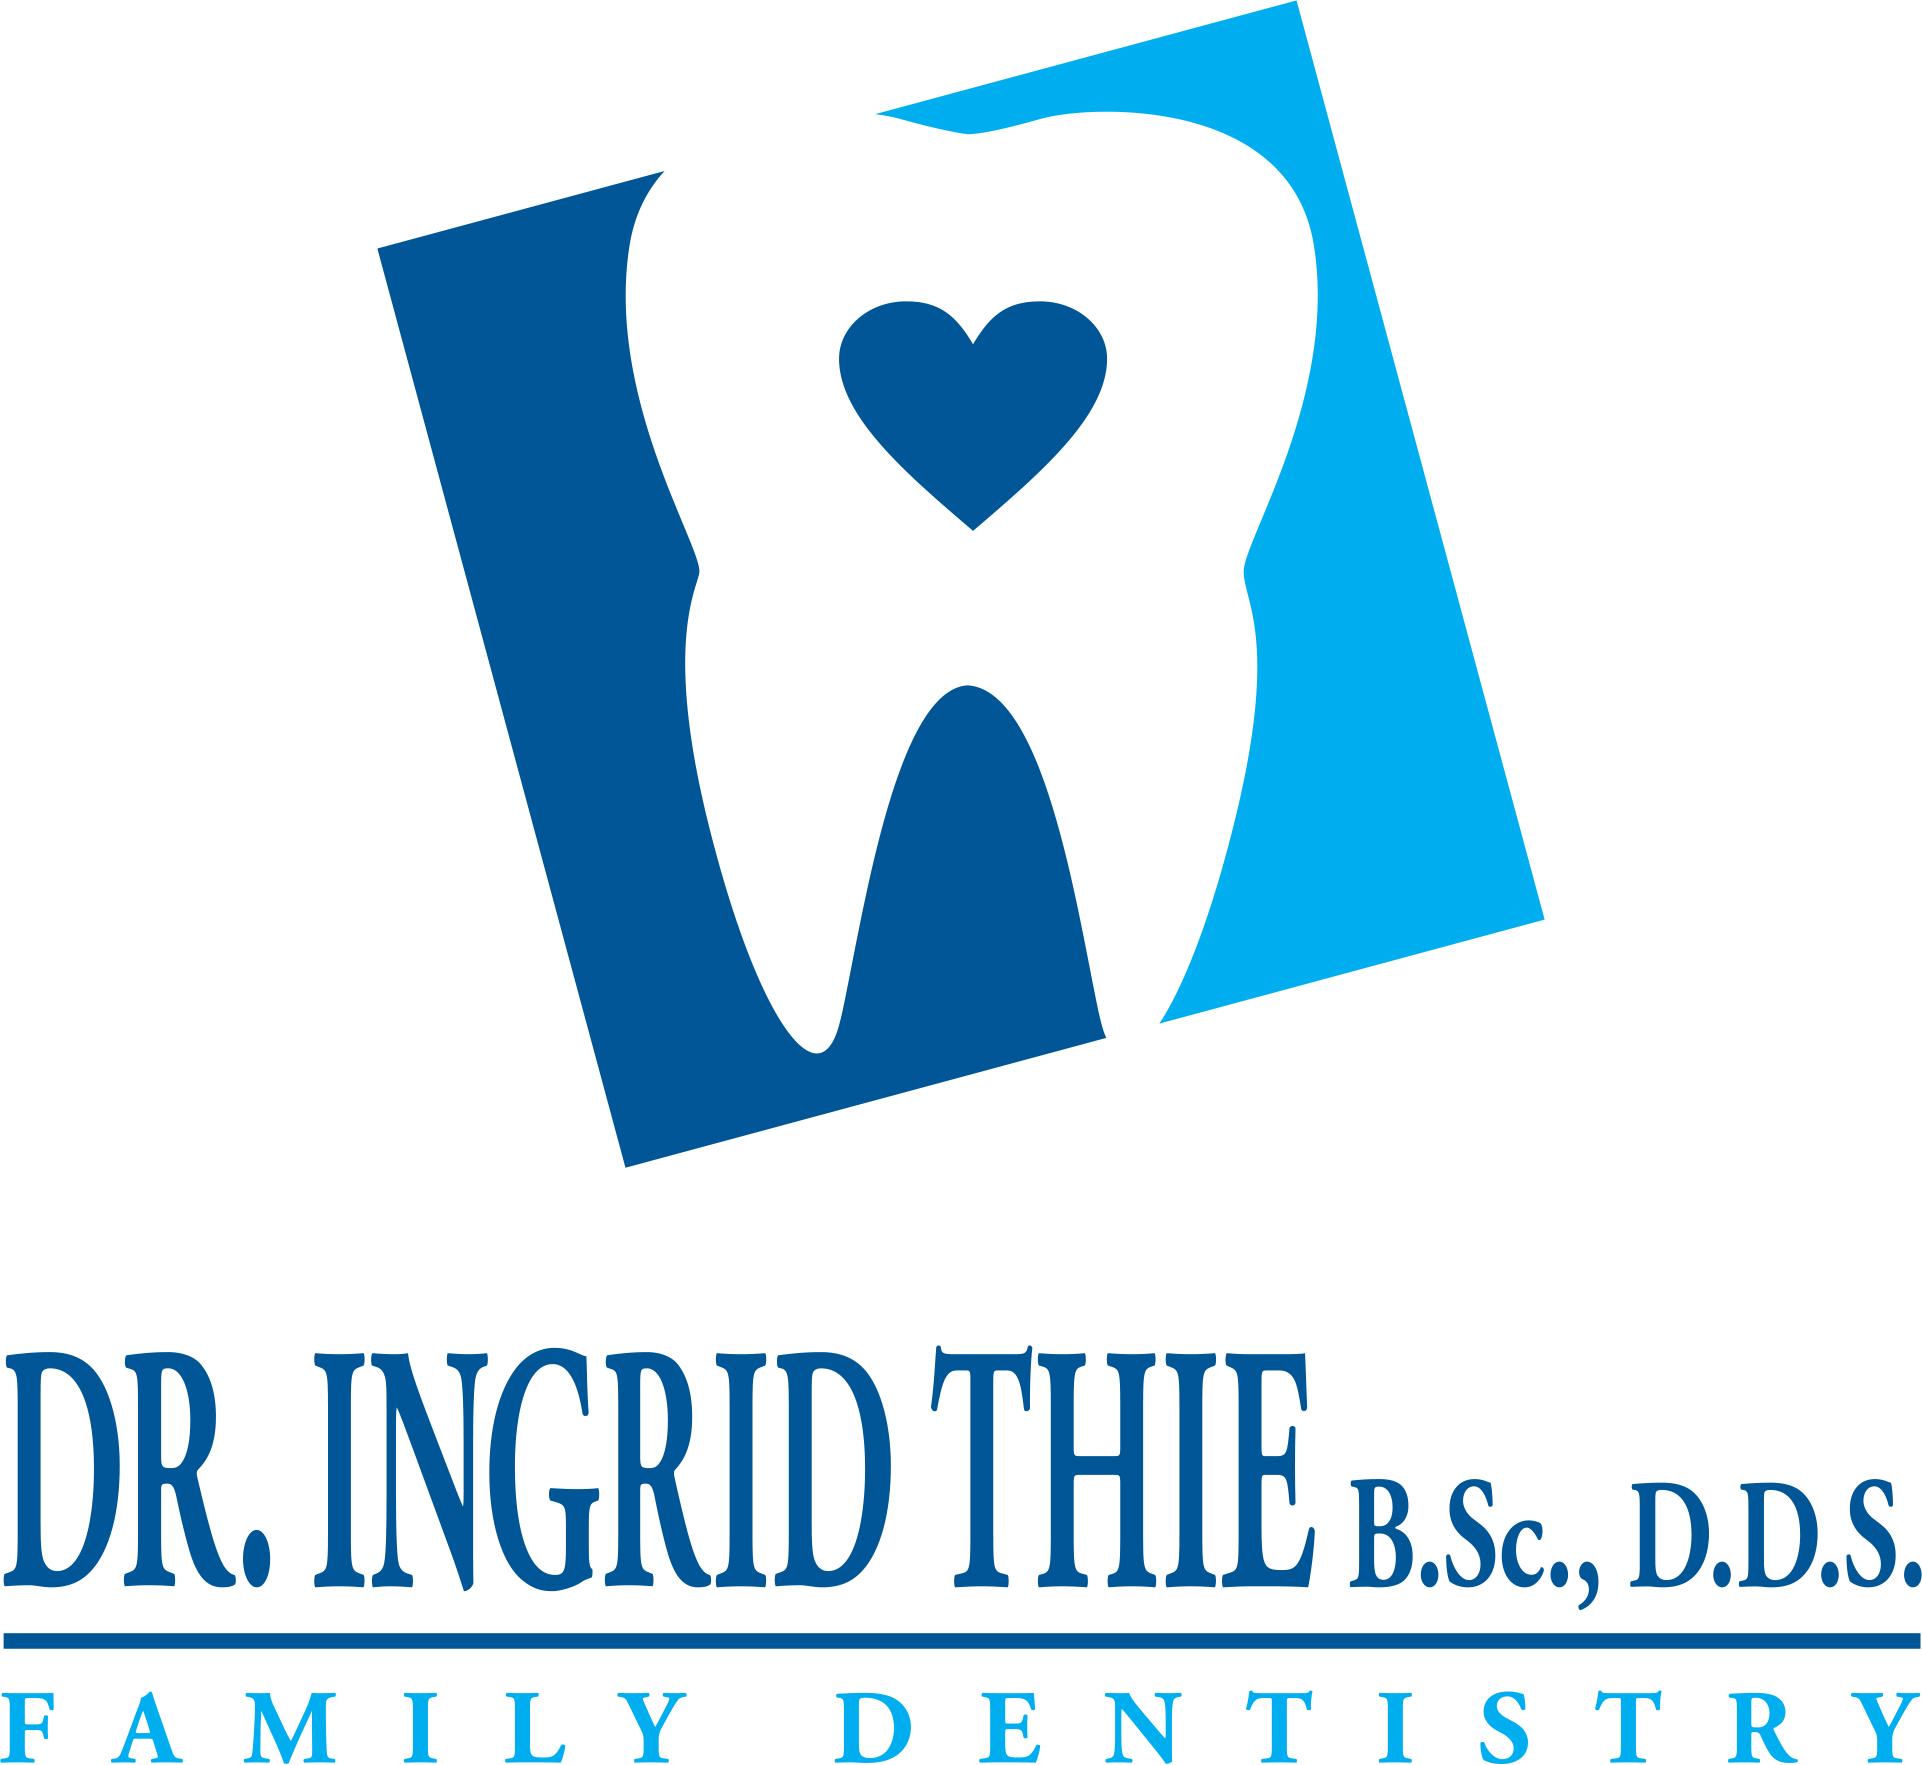 Dr. Ingrid Thie Family Dentistry